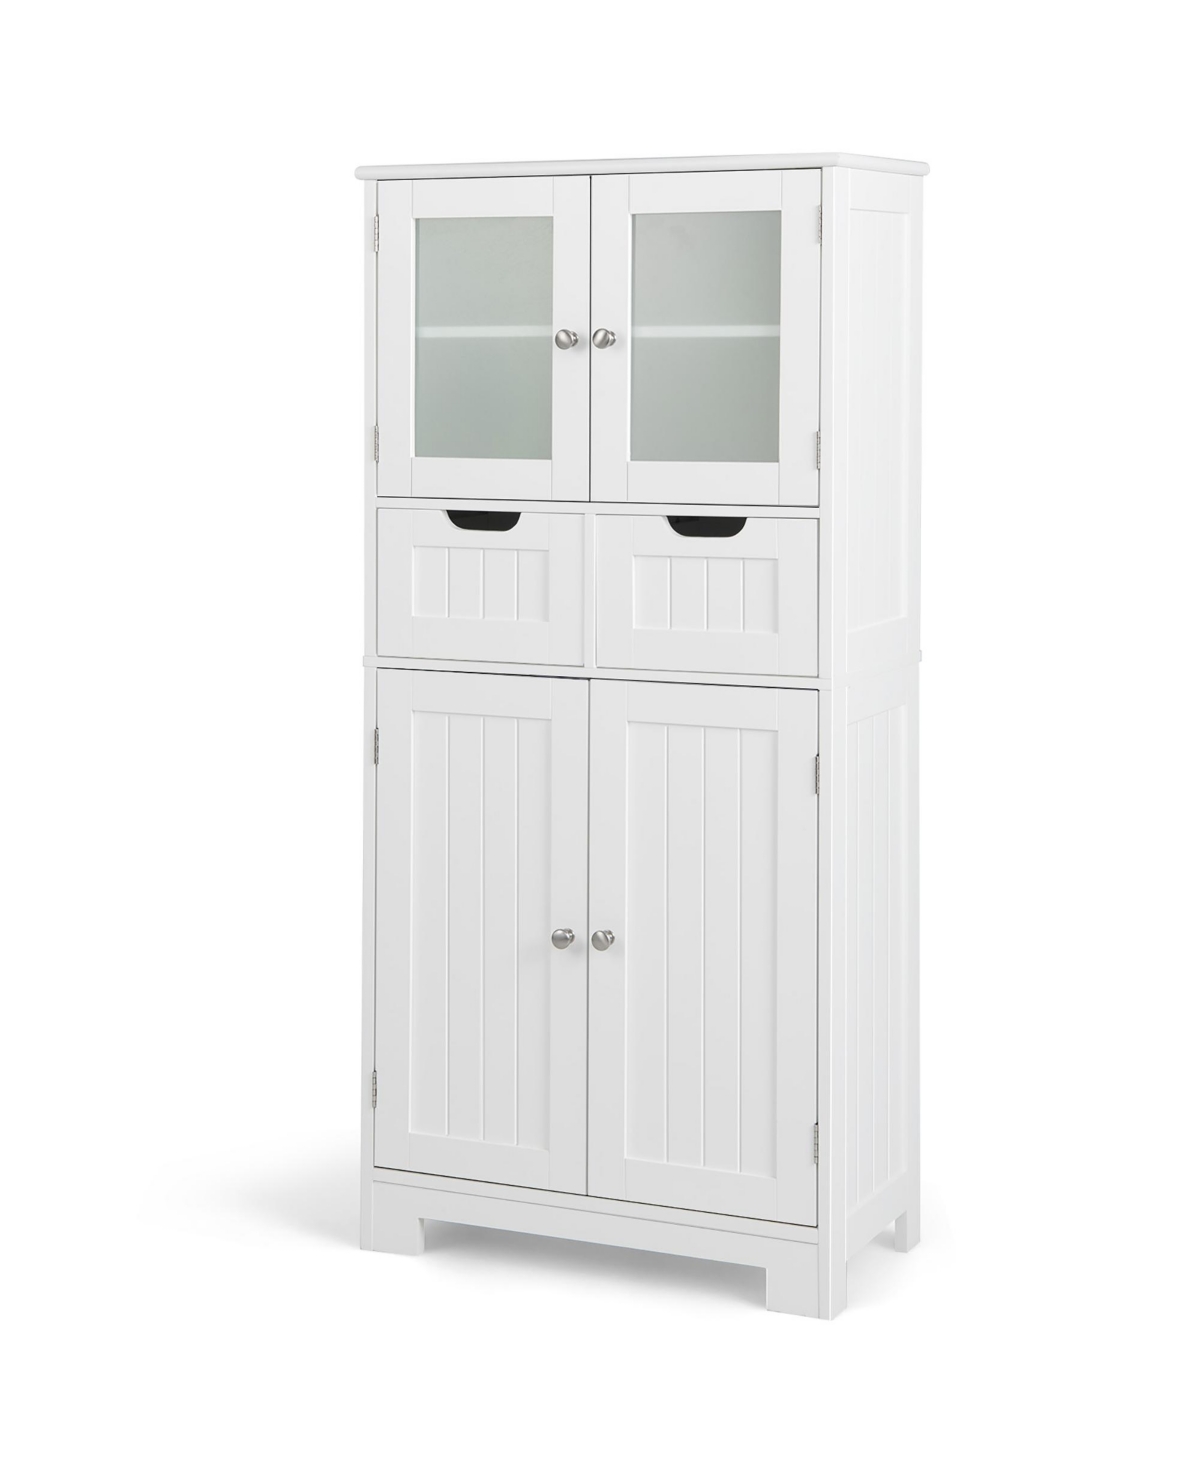 Bathroom Floor Storage Cabinet Kitchen Cupboard with 2 Drawers & Glass Doors - White